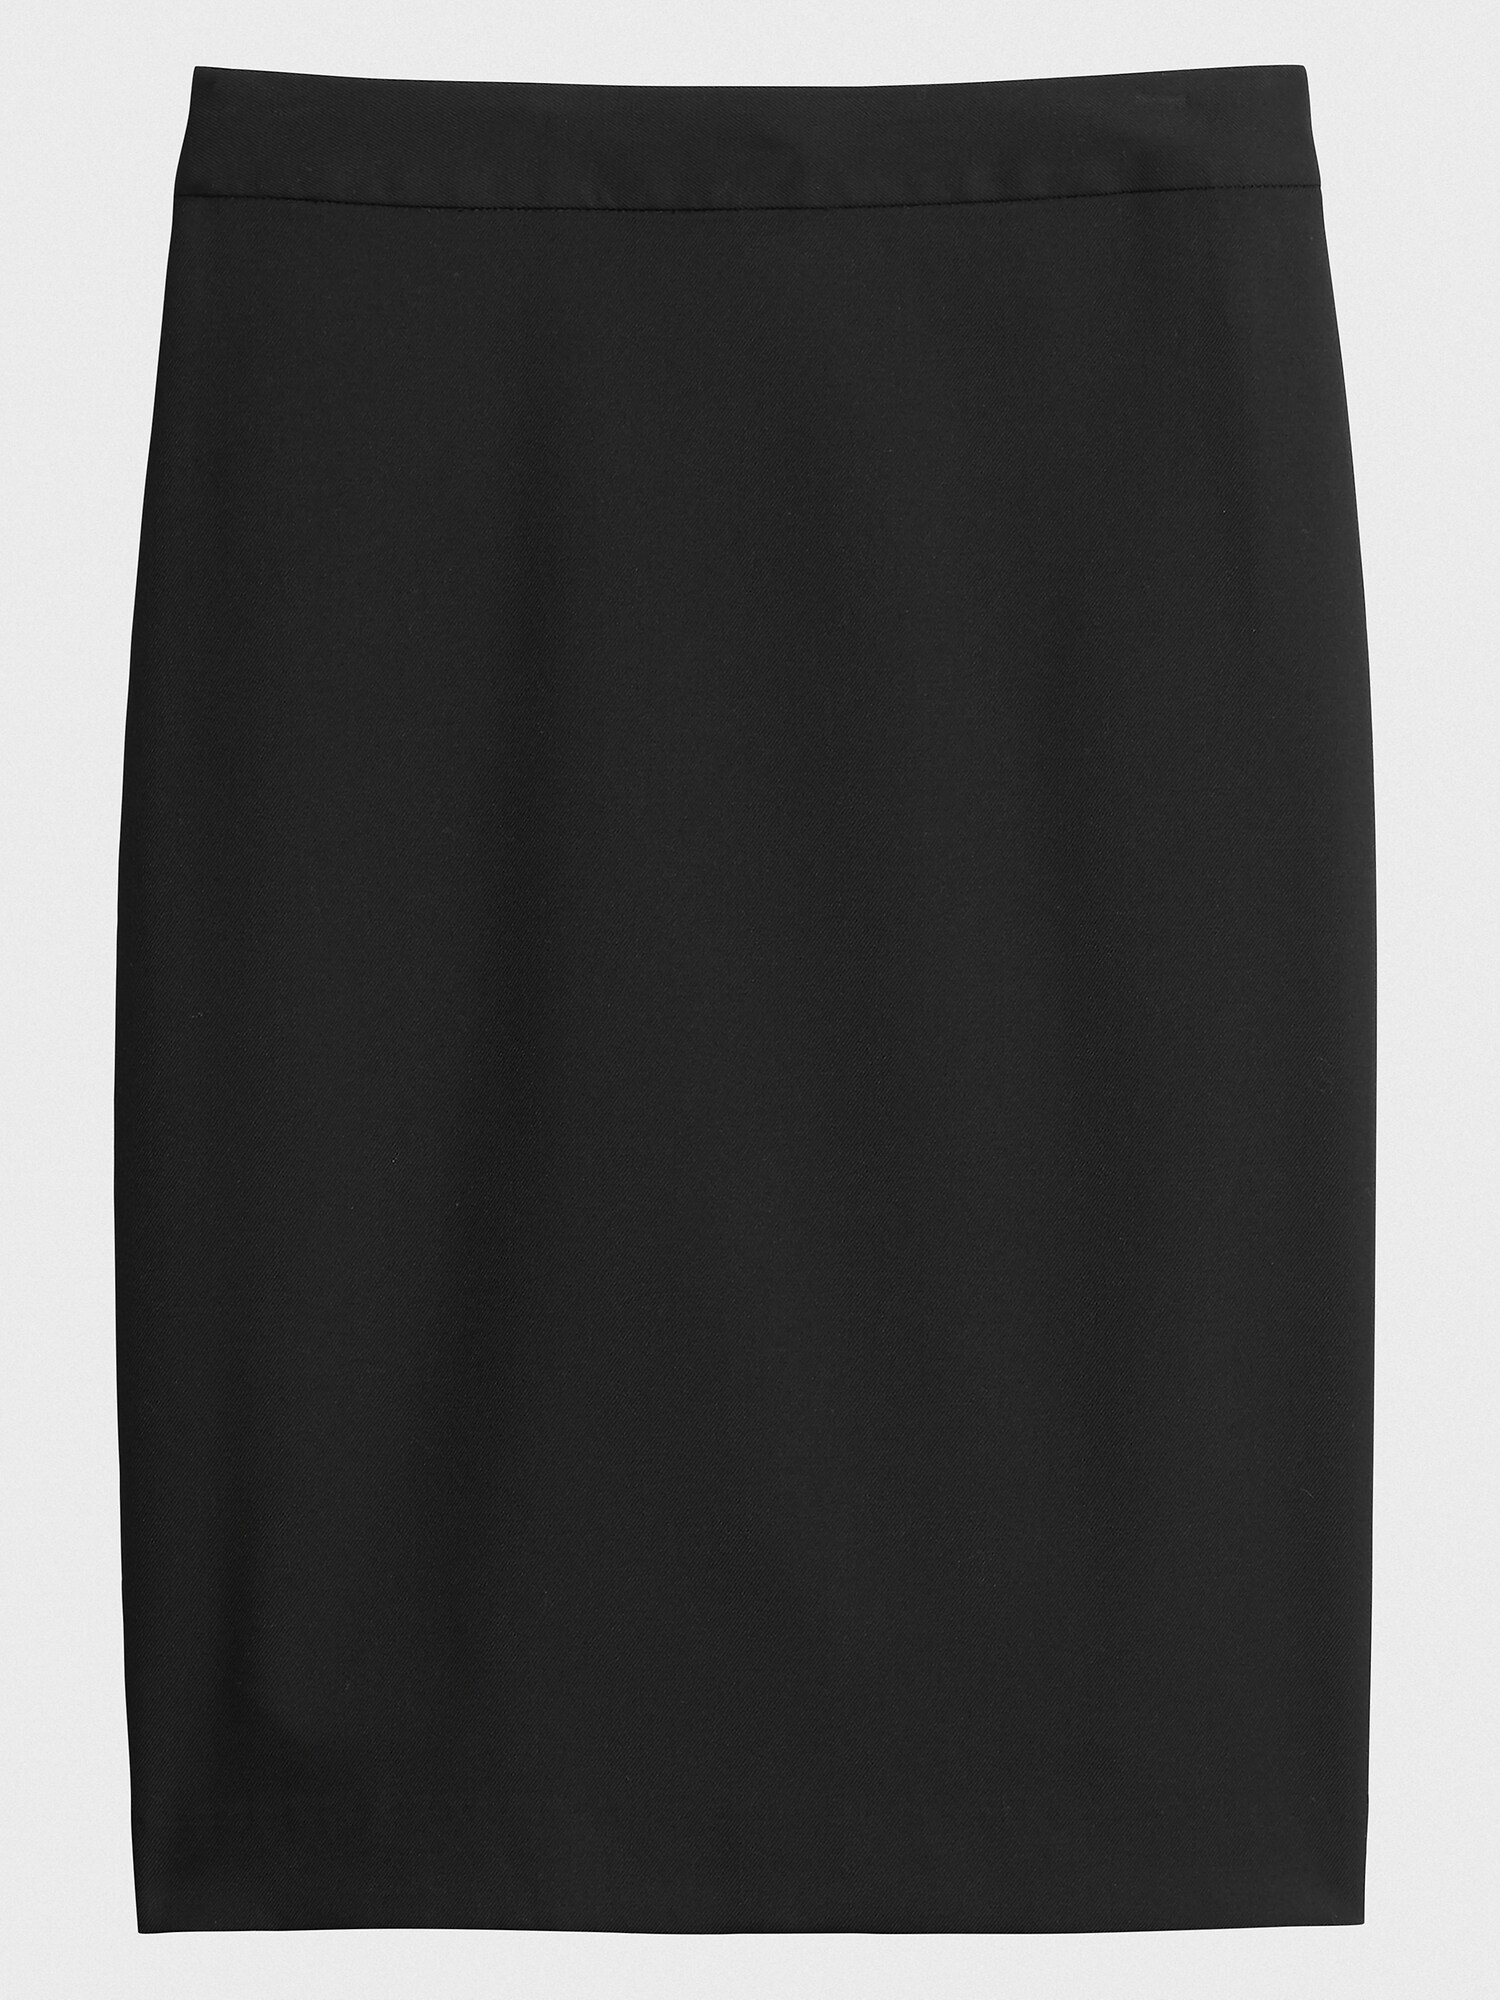 Washable Classic Black Pencil Skirt | Banana Republic Factory